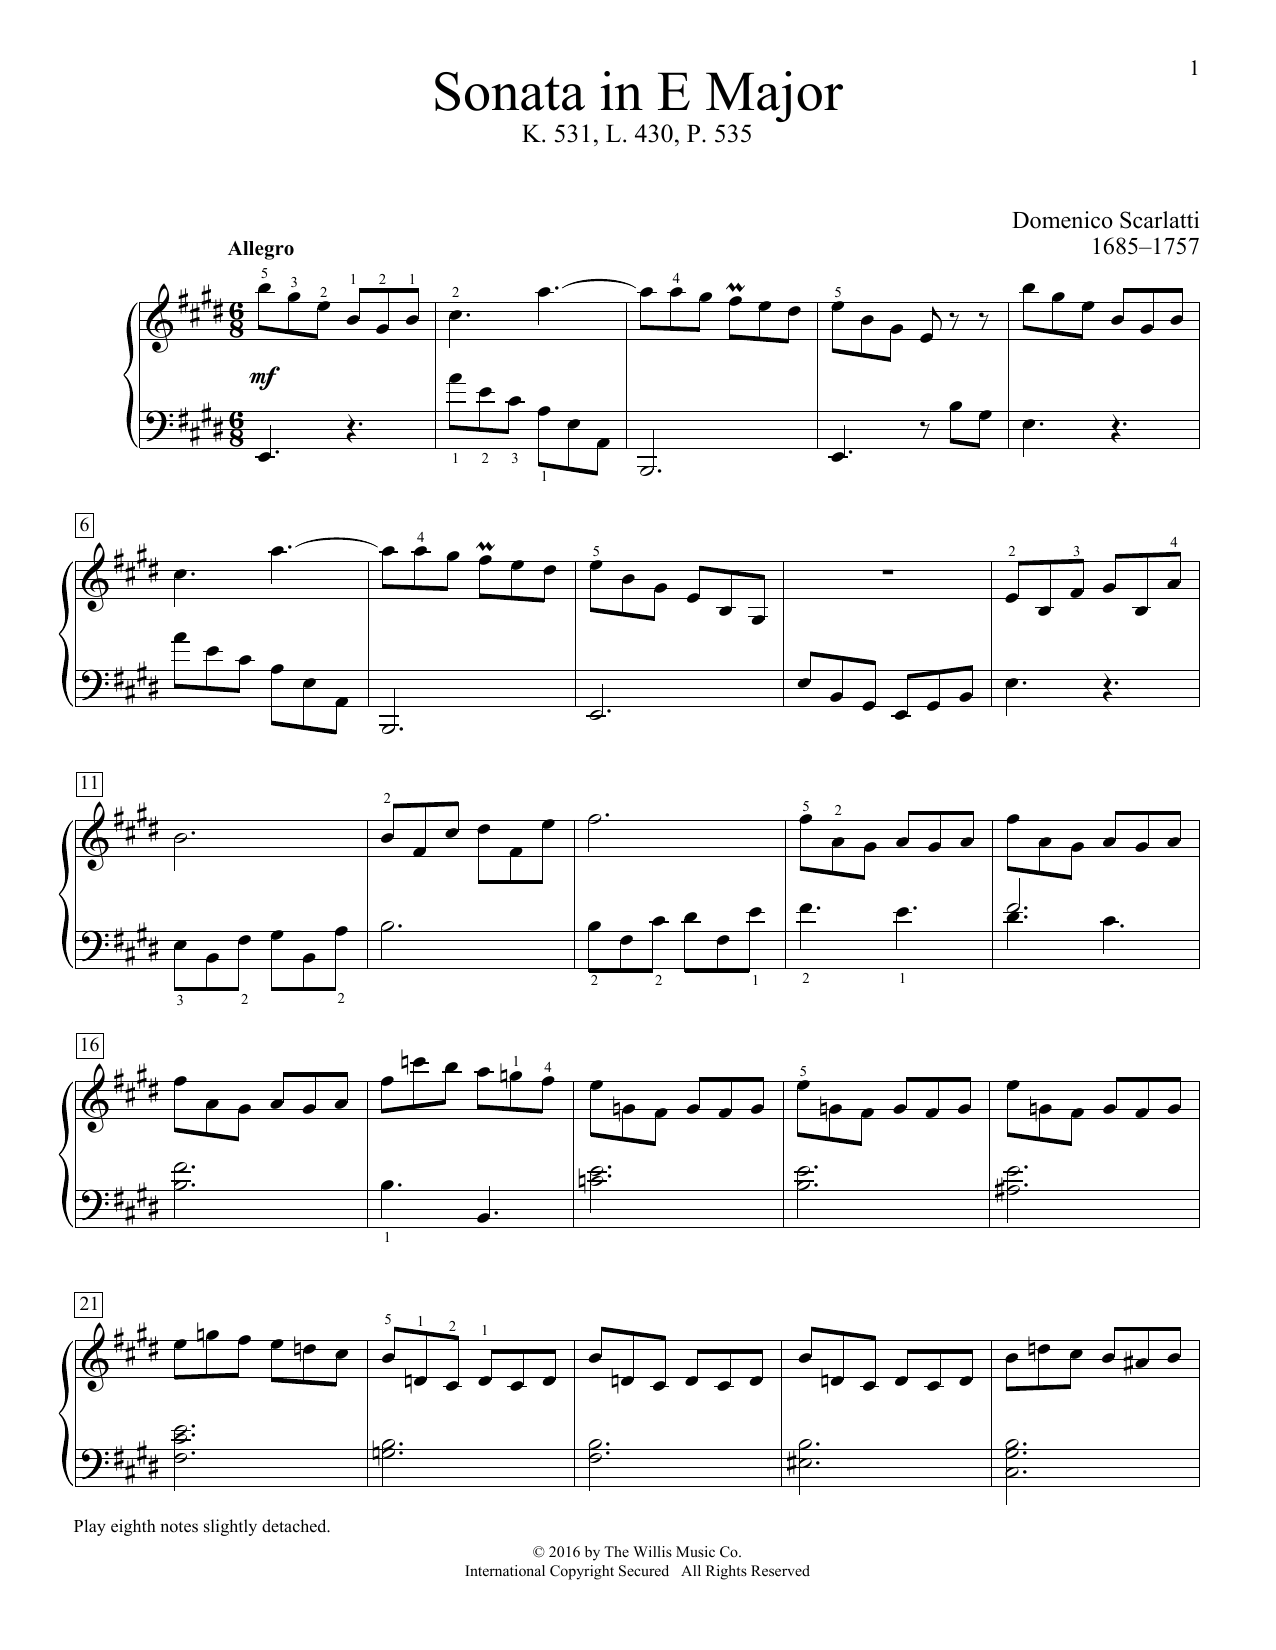 Domenico Scarlatti Sonata In E Major, K. 531, L. 430, P. 535 Sheet Music Notes & Chords for Educational Piano - Download or Print PDF